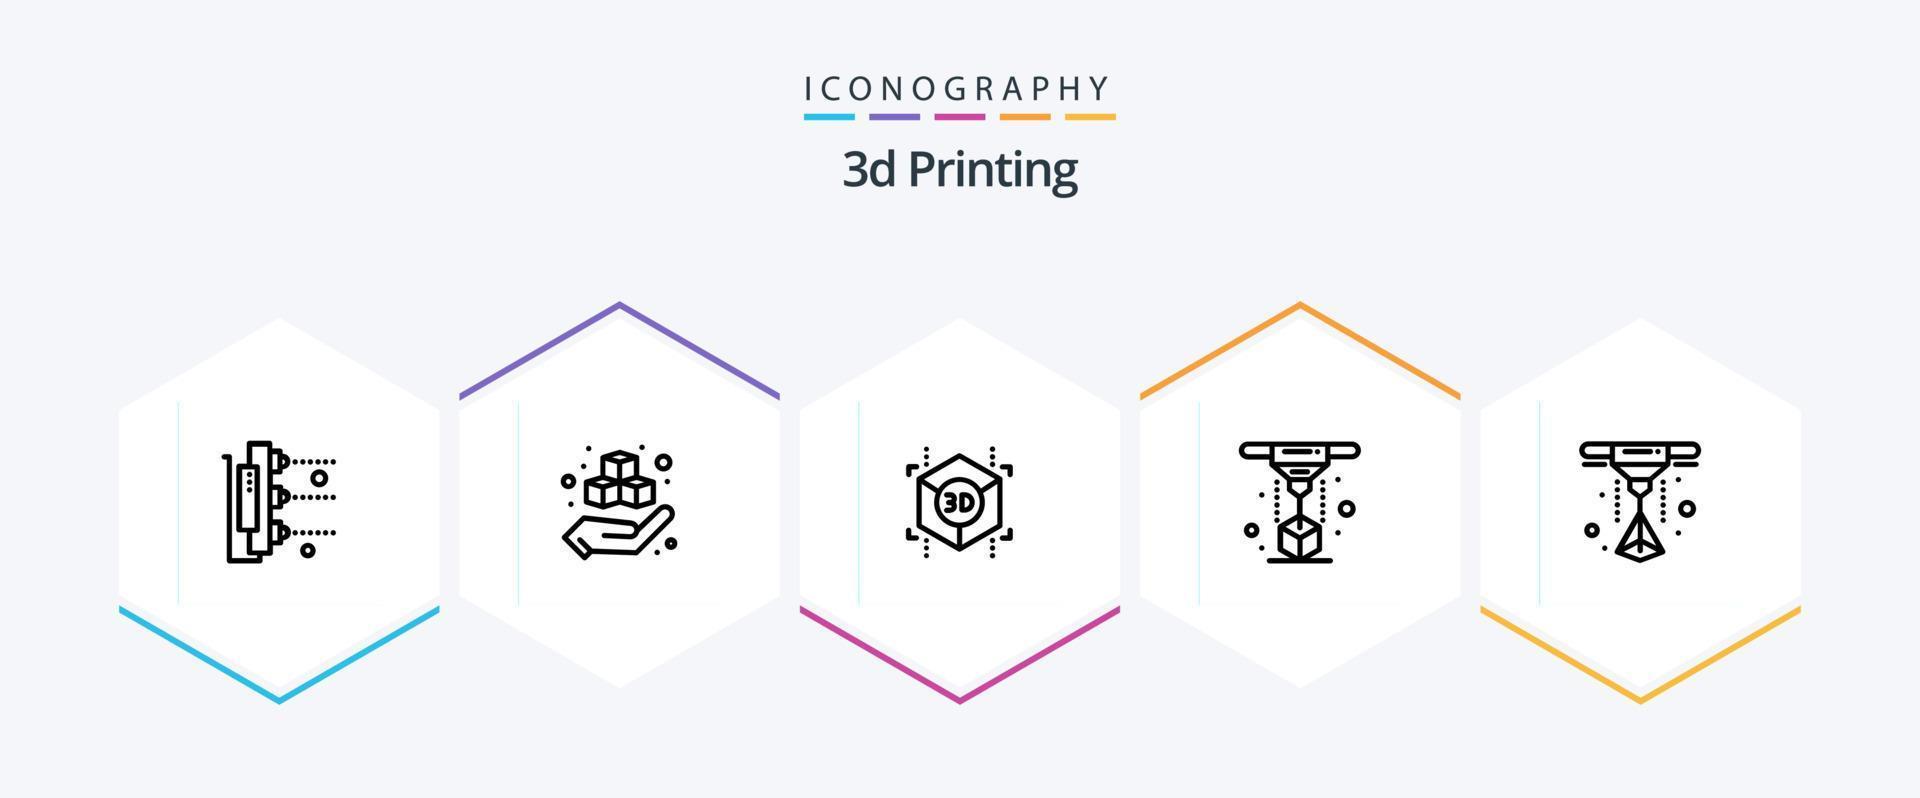 3d Printing 25 Line icon pack including laser. printer. productd. modeling. shape vector